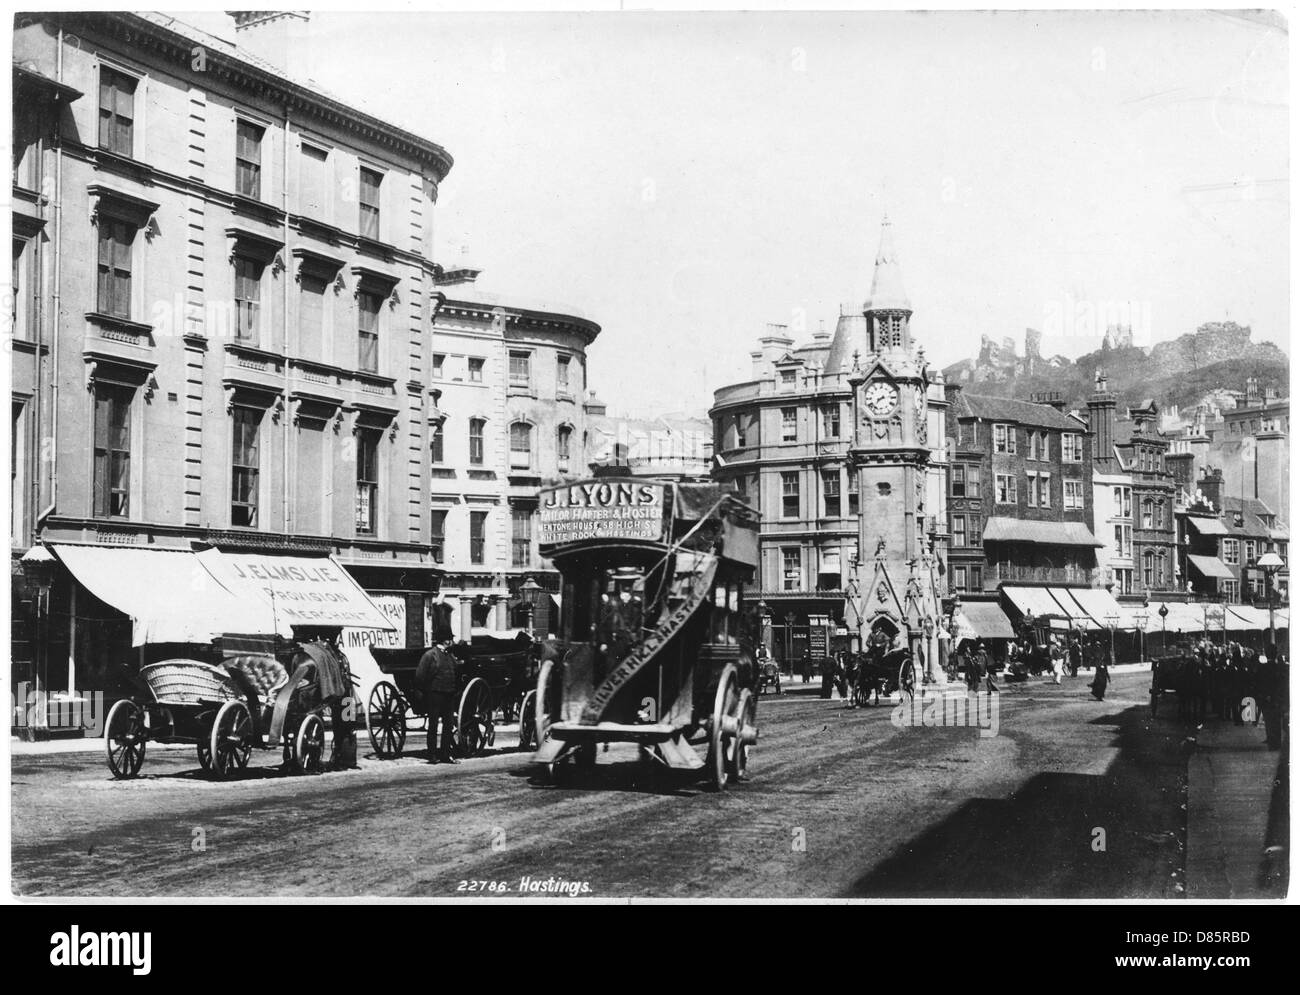 Hastings street scene, 19th century Stock Photo